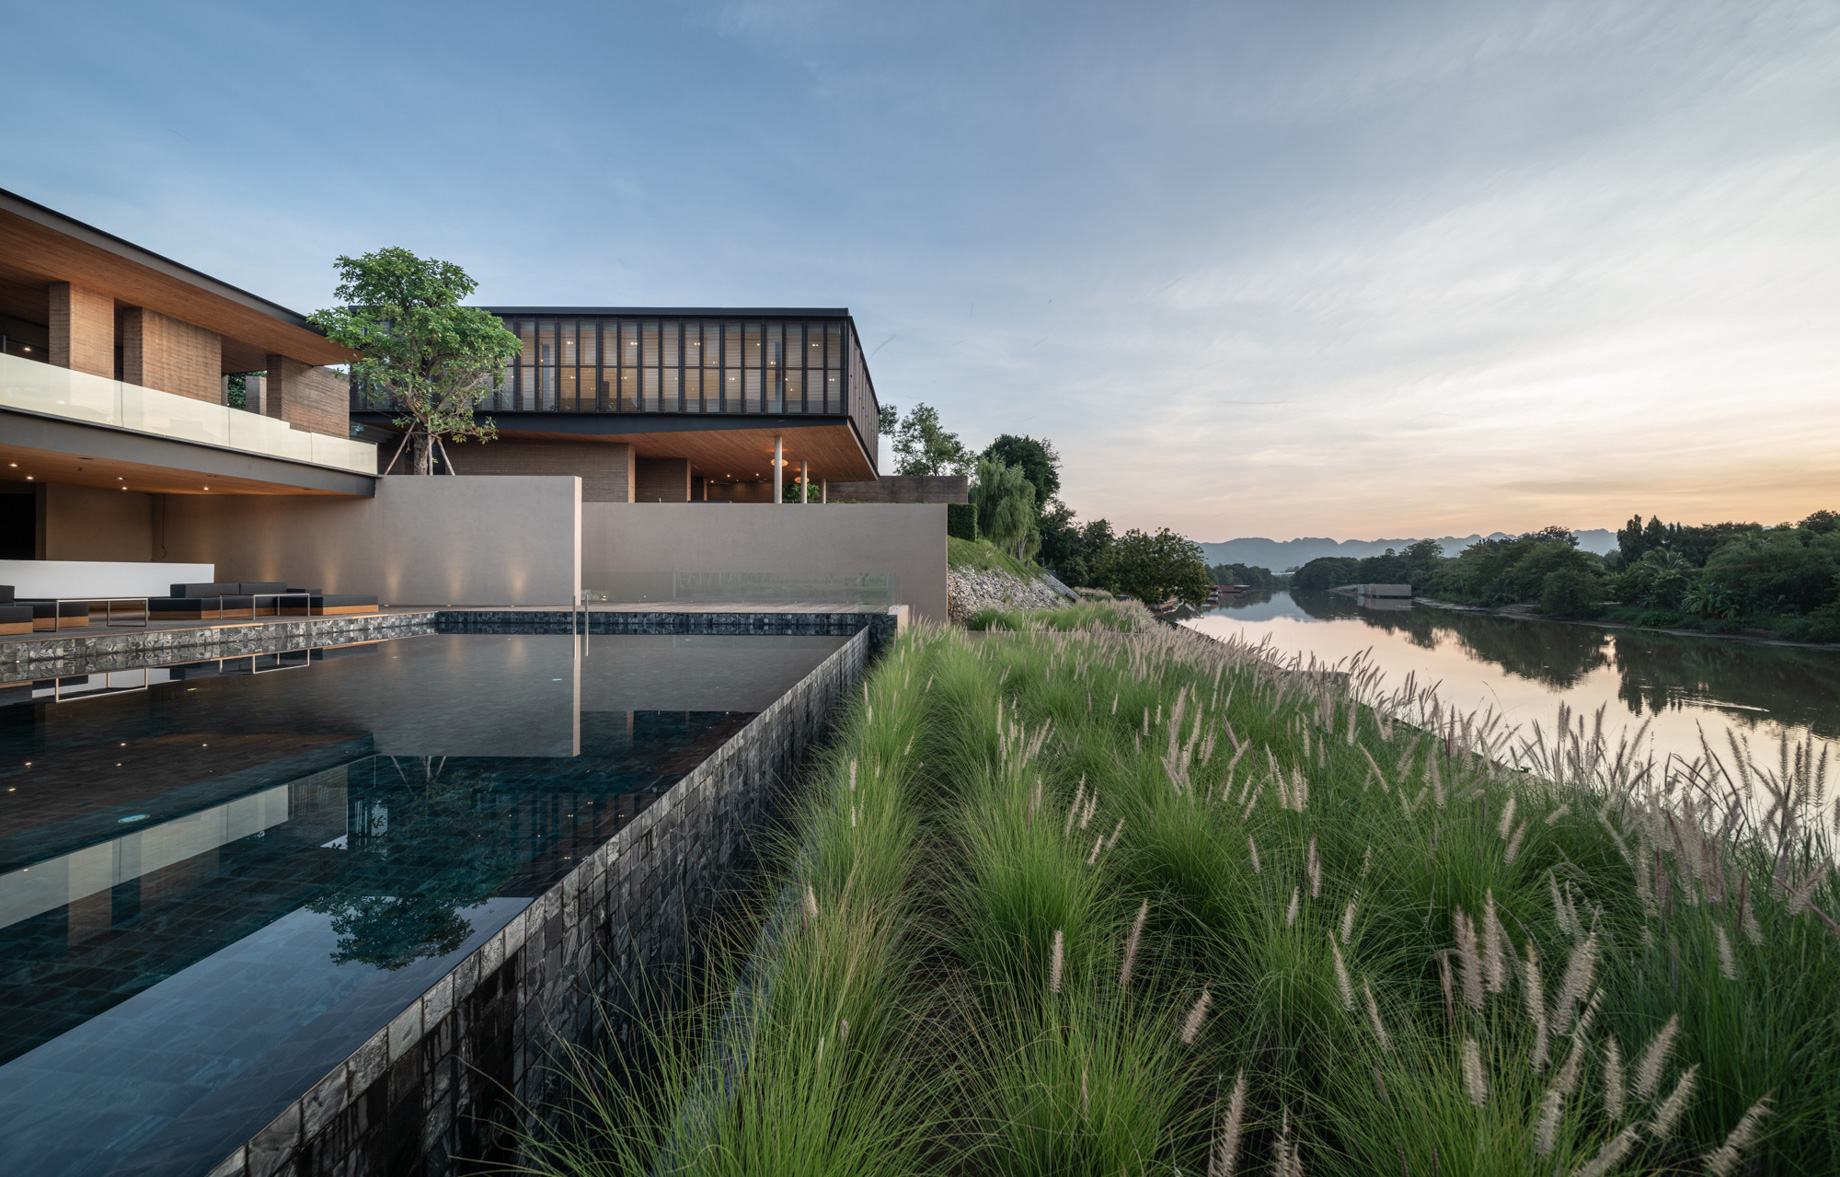 Tara Villa Riverkwai Resort – Kanchanaburi, Thailand – Infinity Pool River View